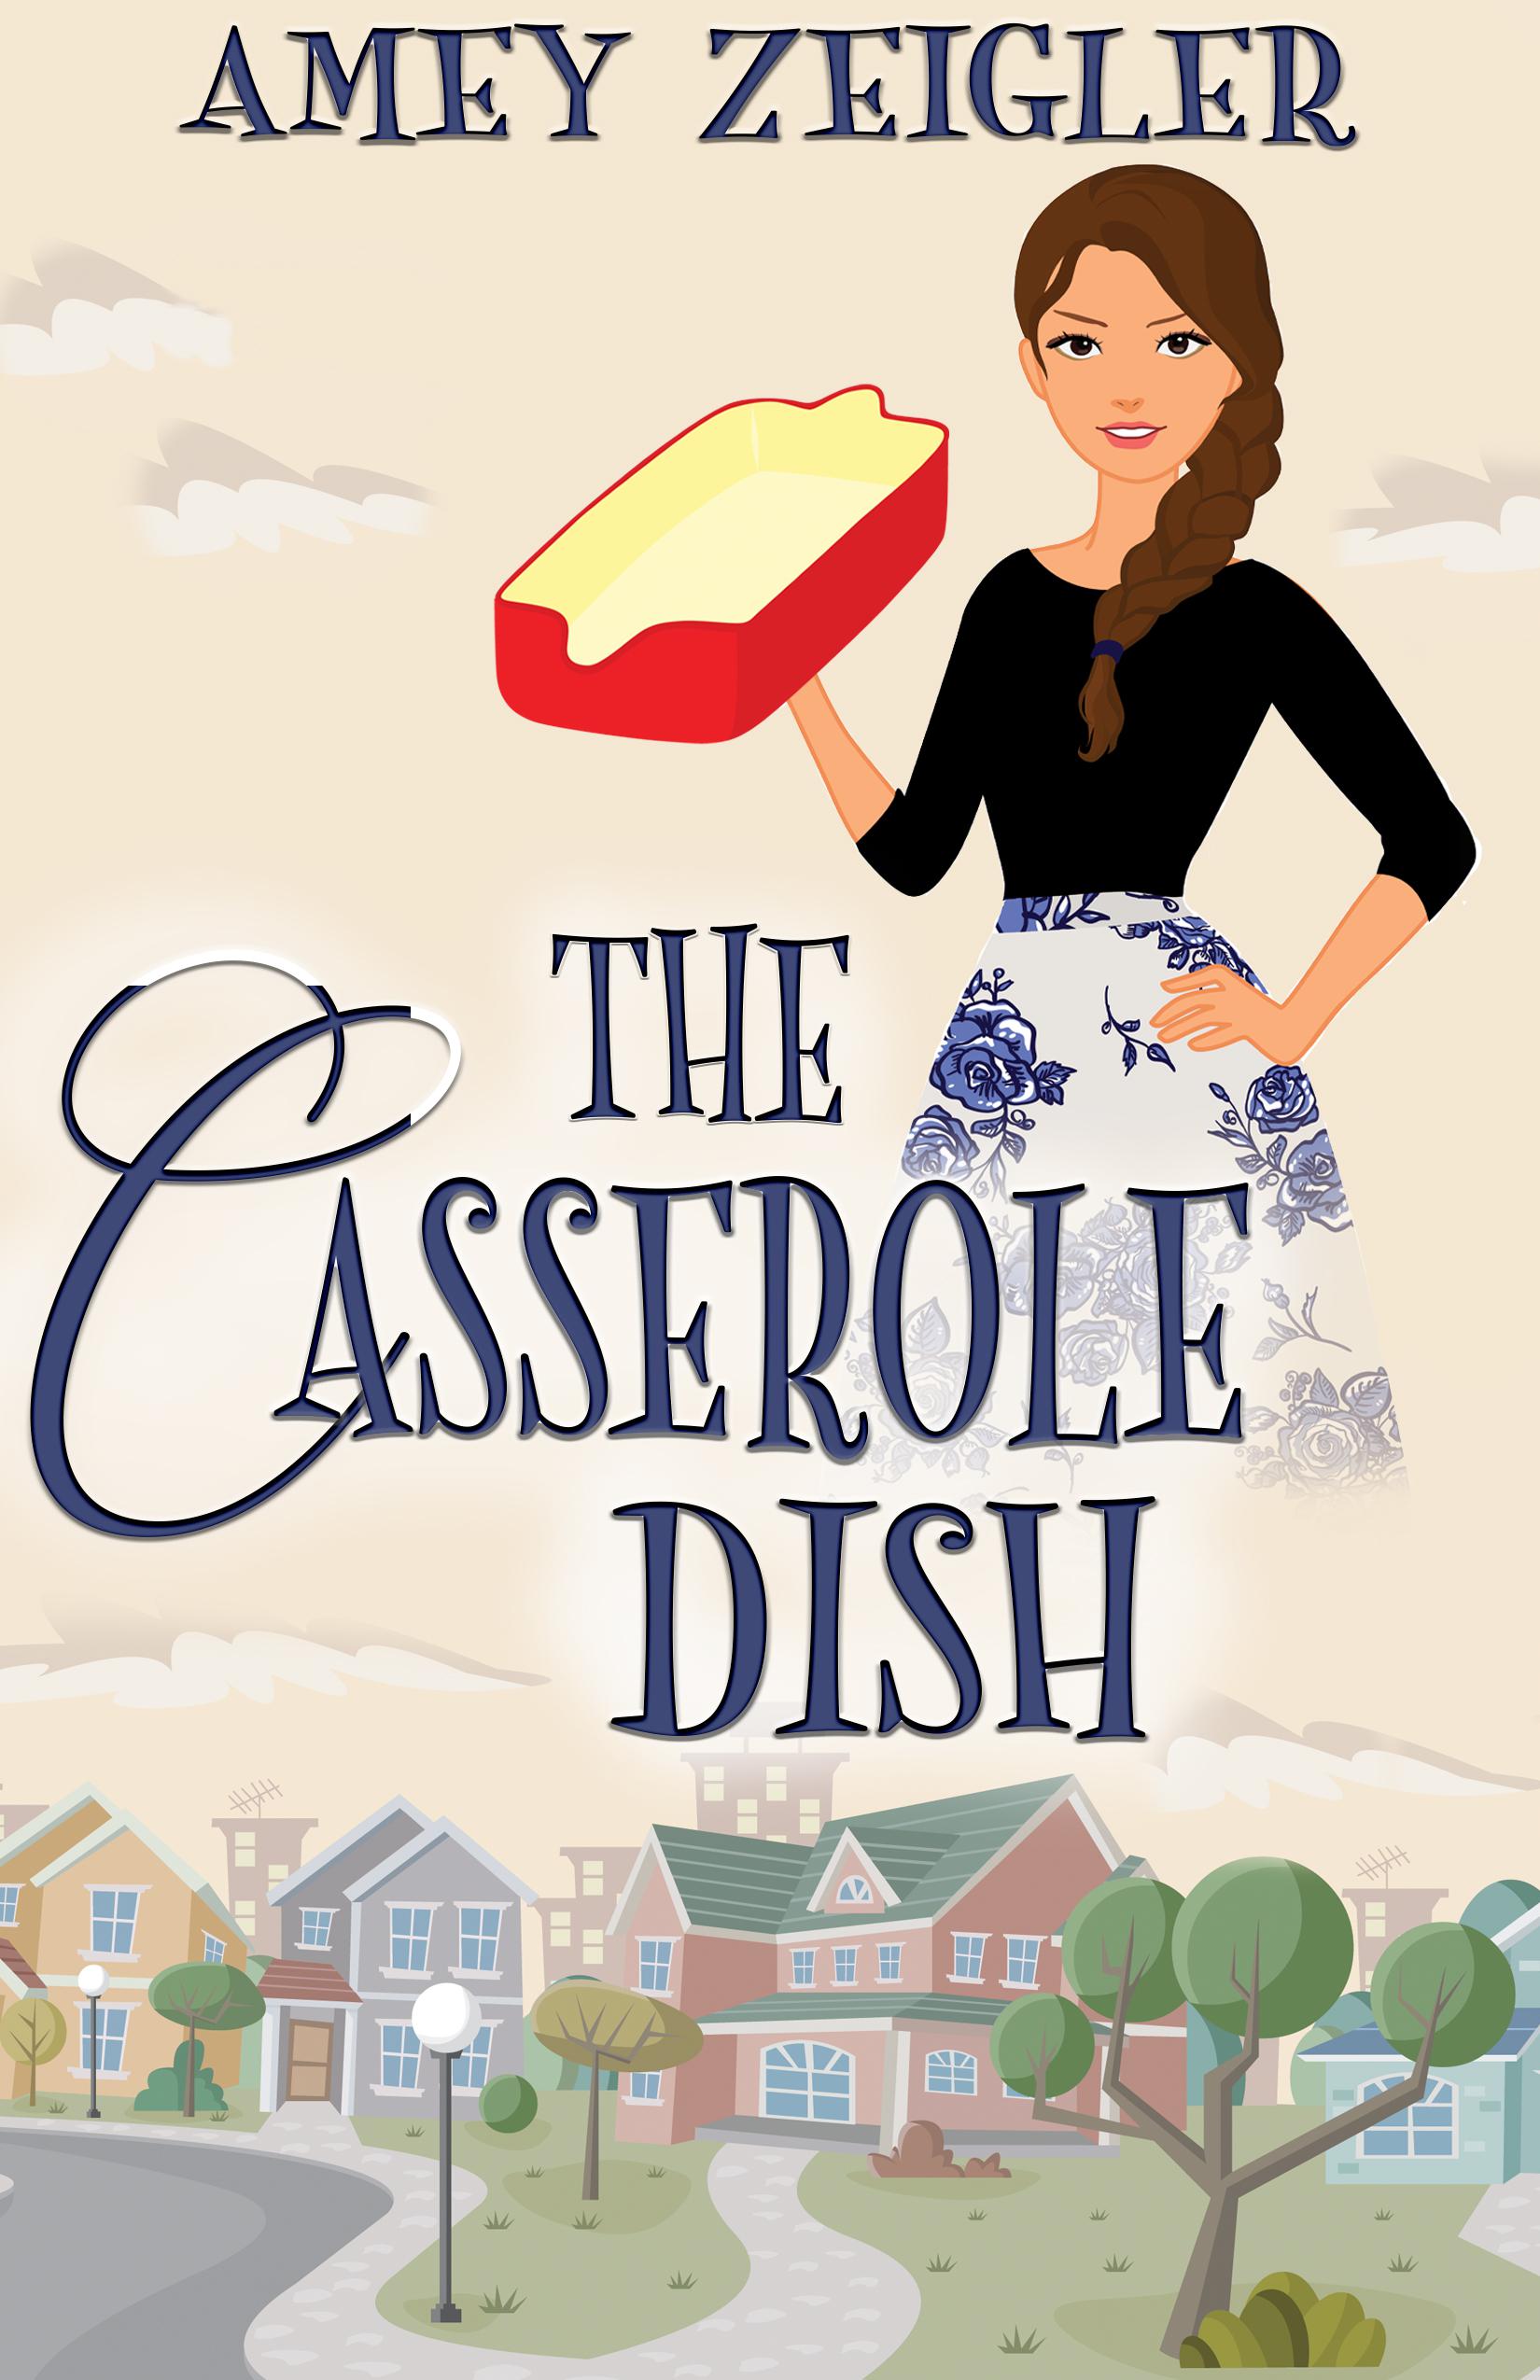 The Casserole Dish